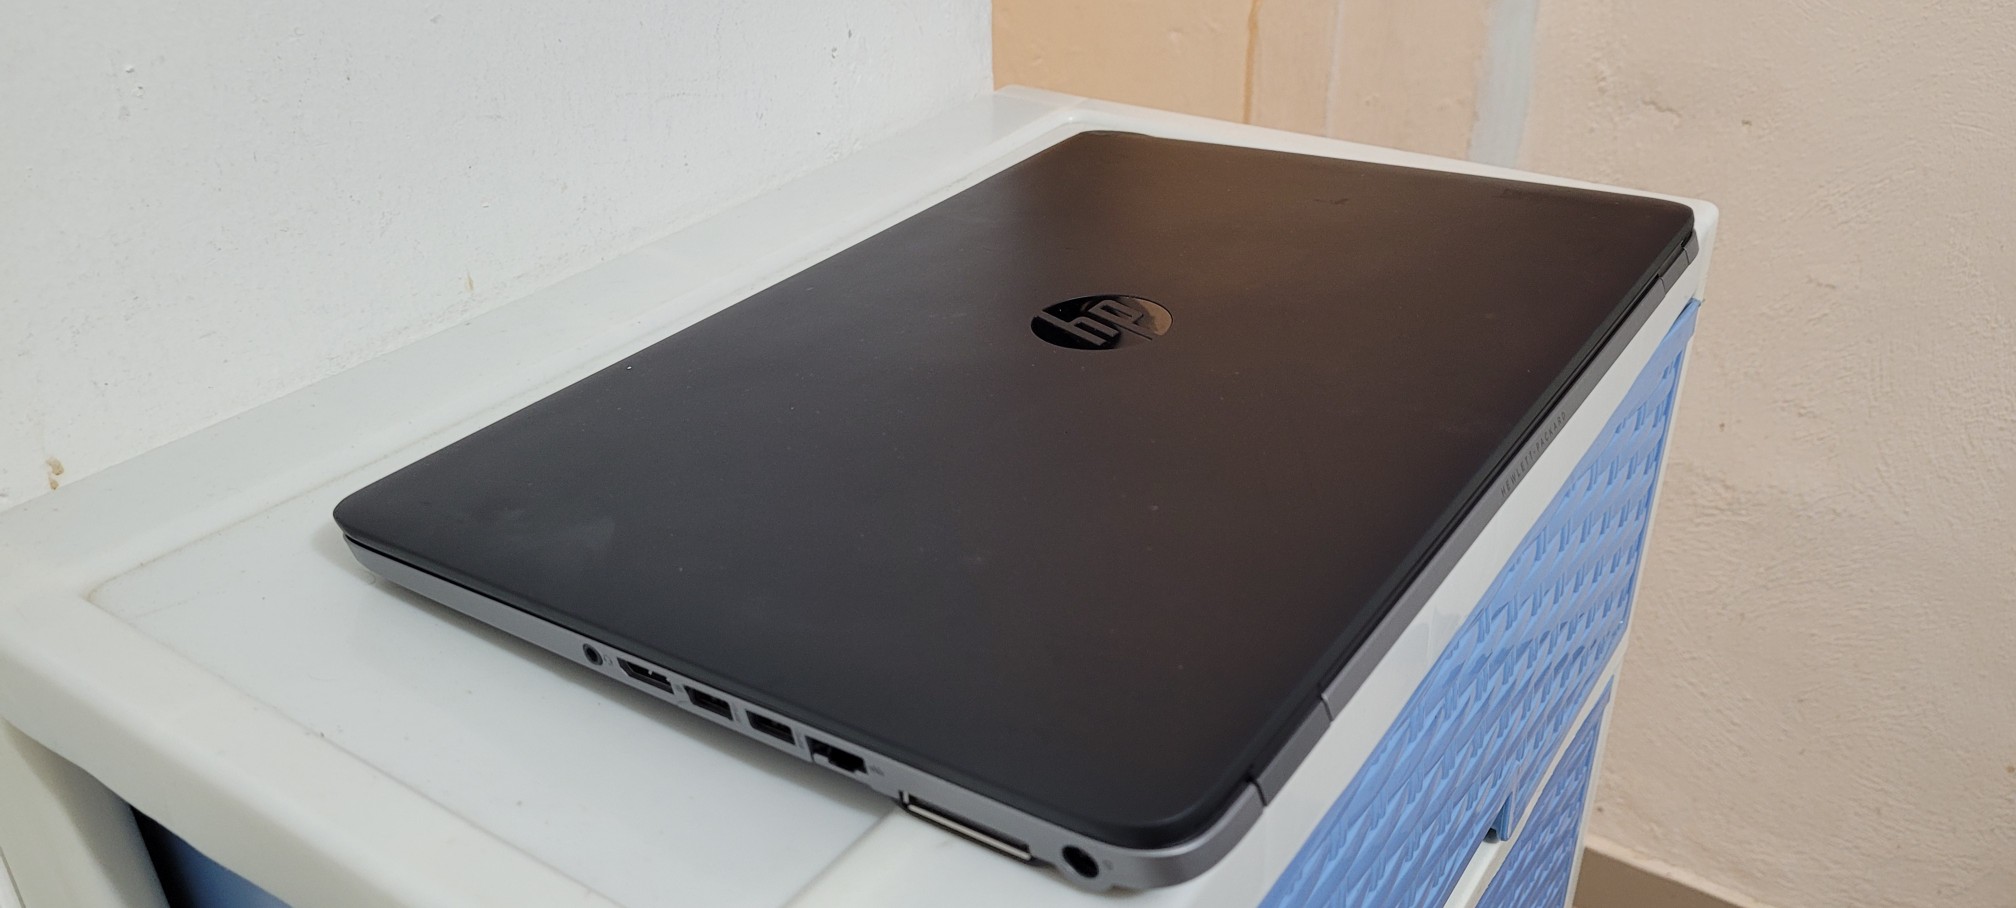 computadoras y laptops - Laptop hp 17 Pulg Core i7 
2.7gh Ram 16gb Disco 512gb SSD Full 2